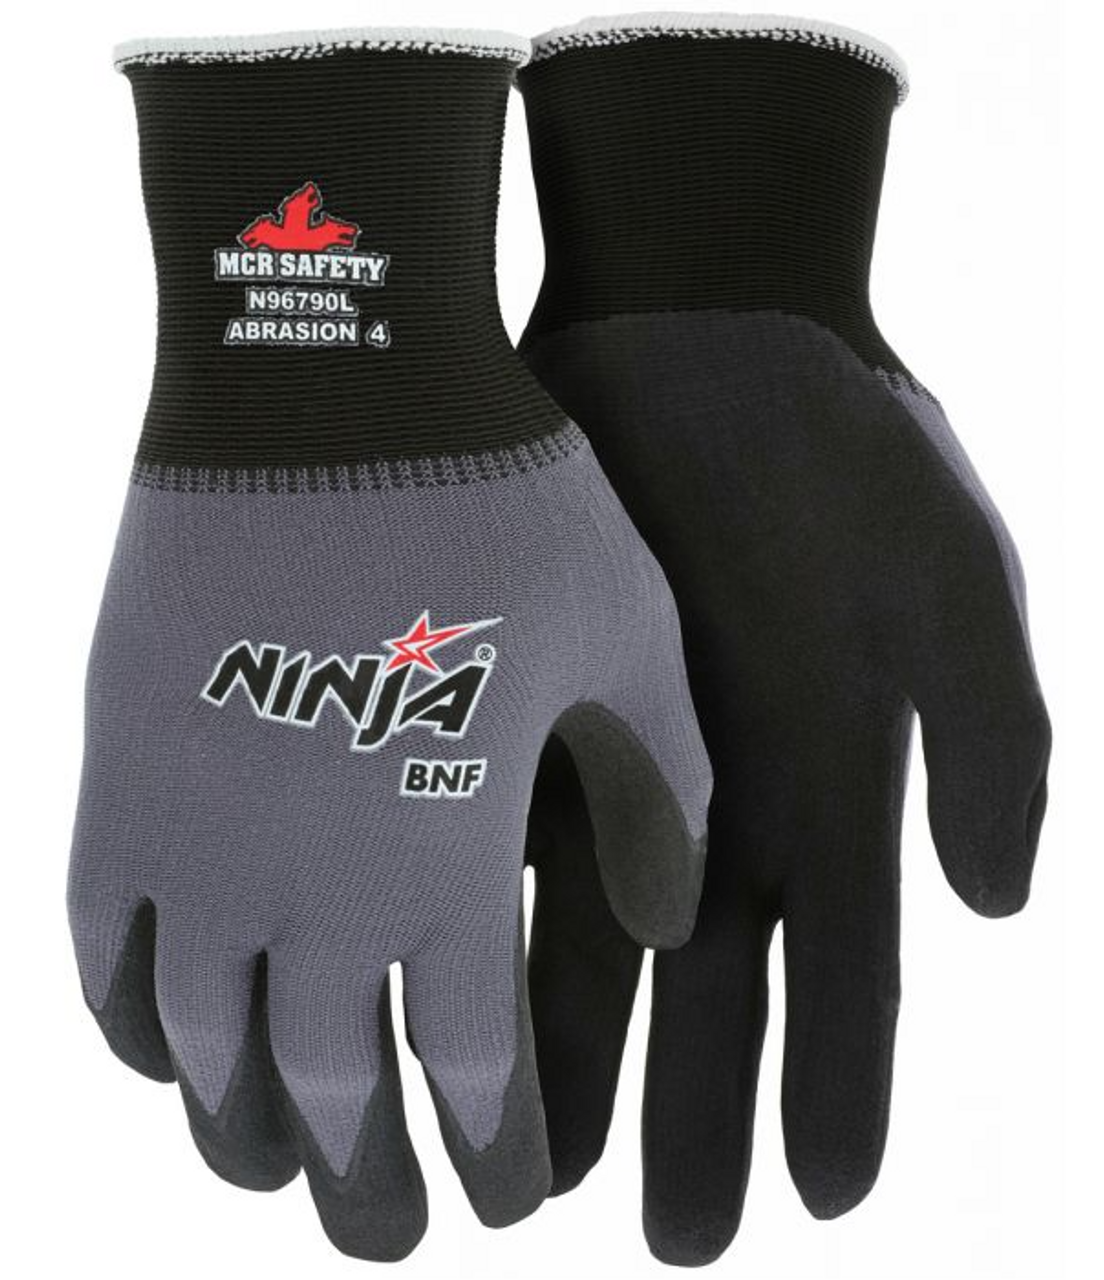 MCR Safety Ninja® Breathable Nitrile Foam (BNF) Work Gloves Gray / Black